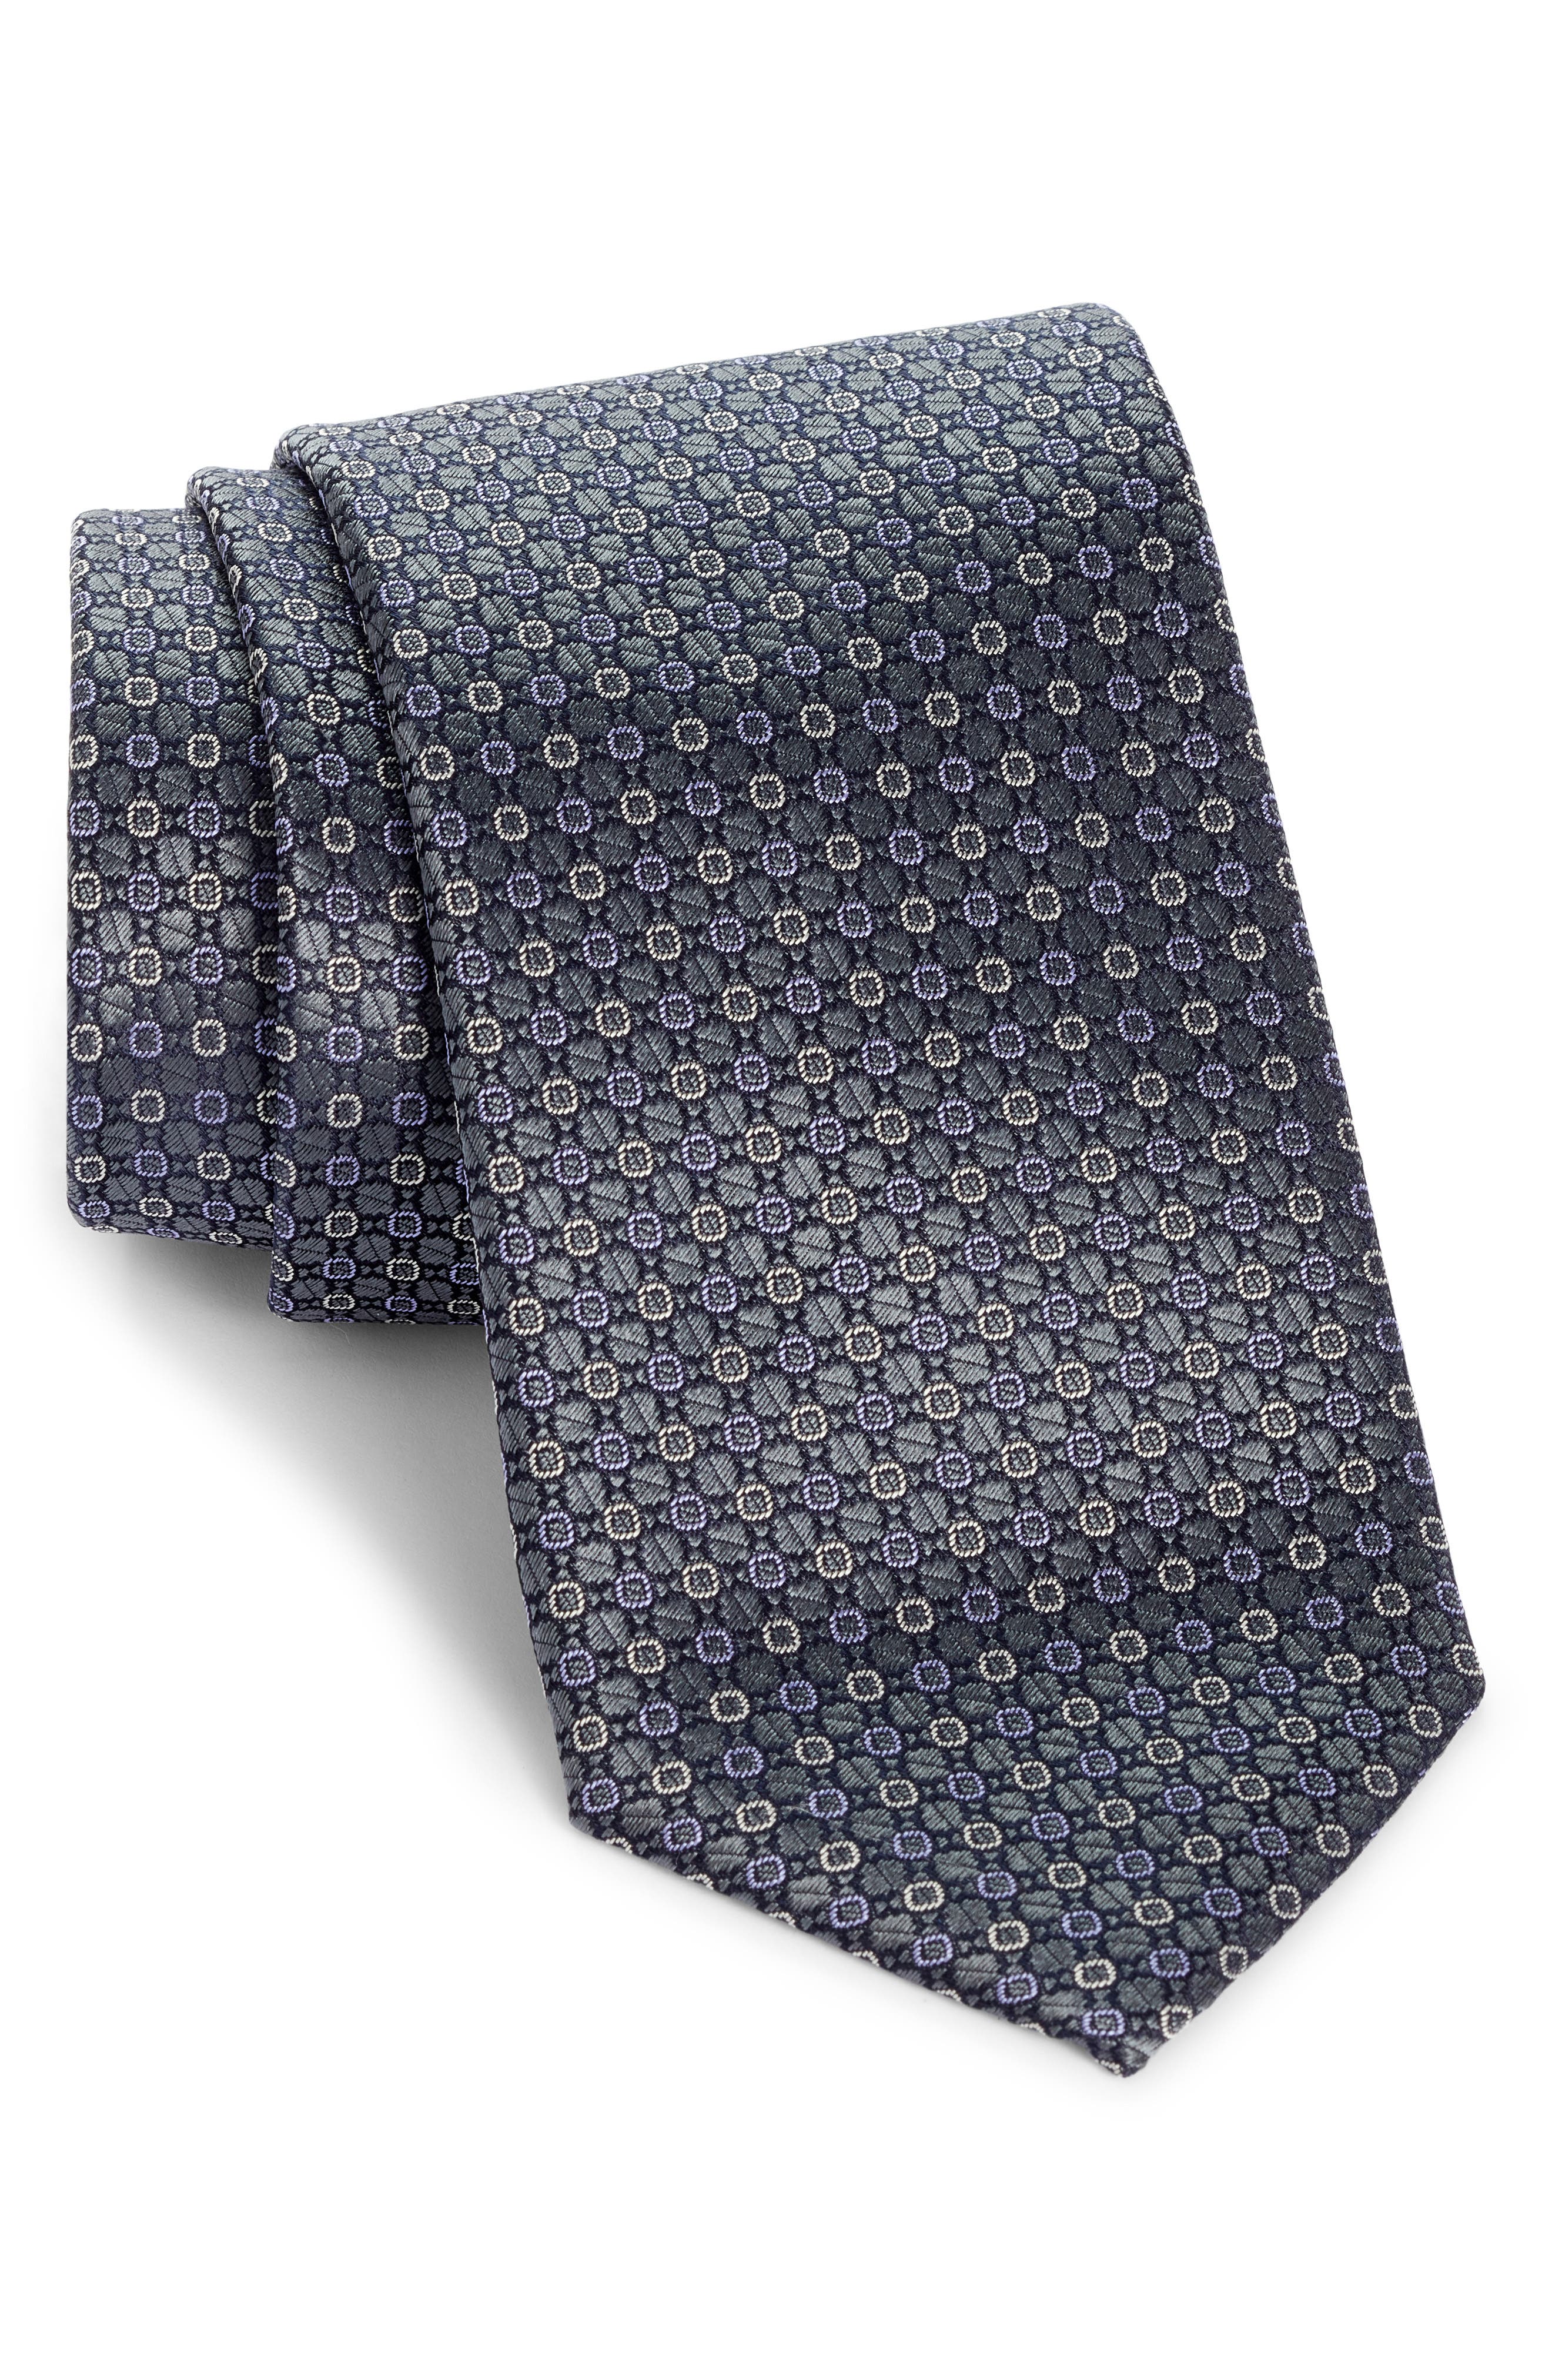 men's grey and silve geometric design woven tie 